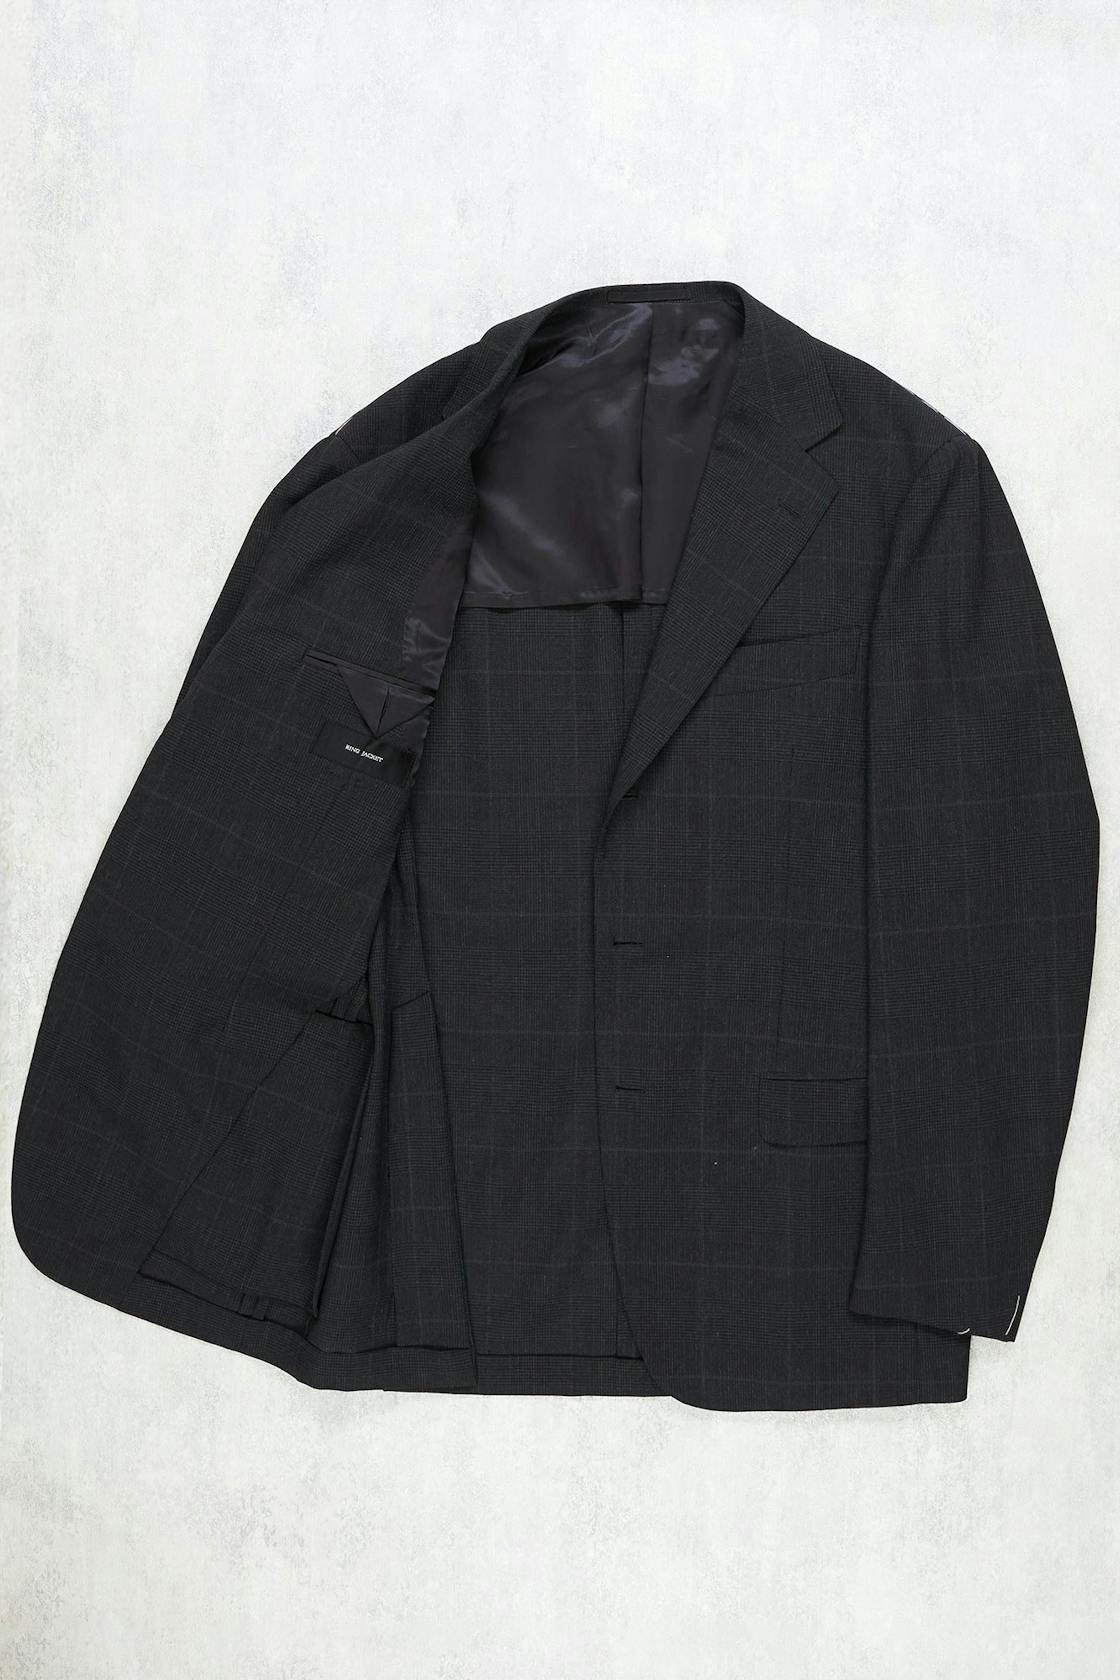 Ring Jacket AMJ03 Charcoal Wool/Mohair/Silk Glen Check Sport Coat